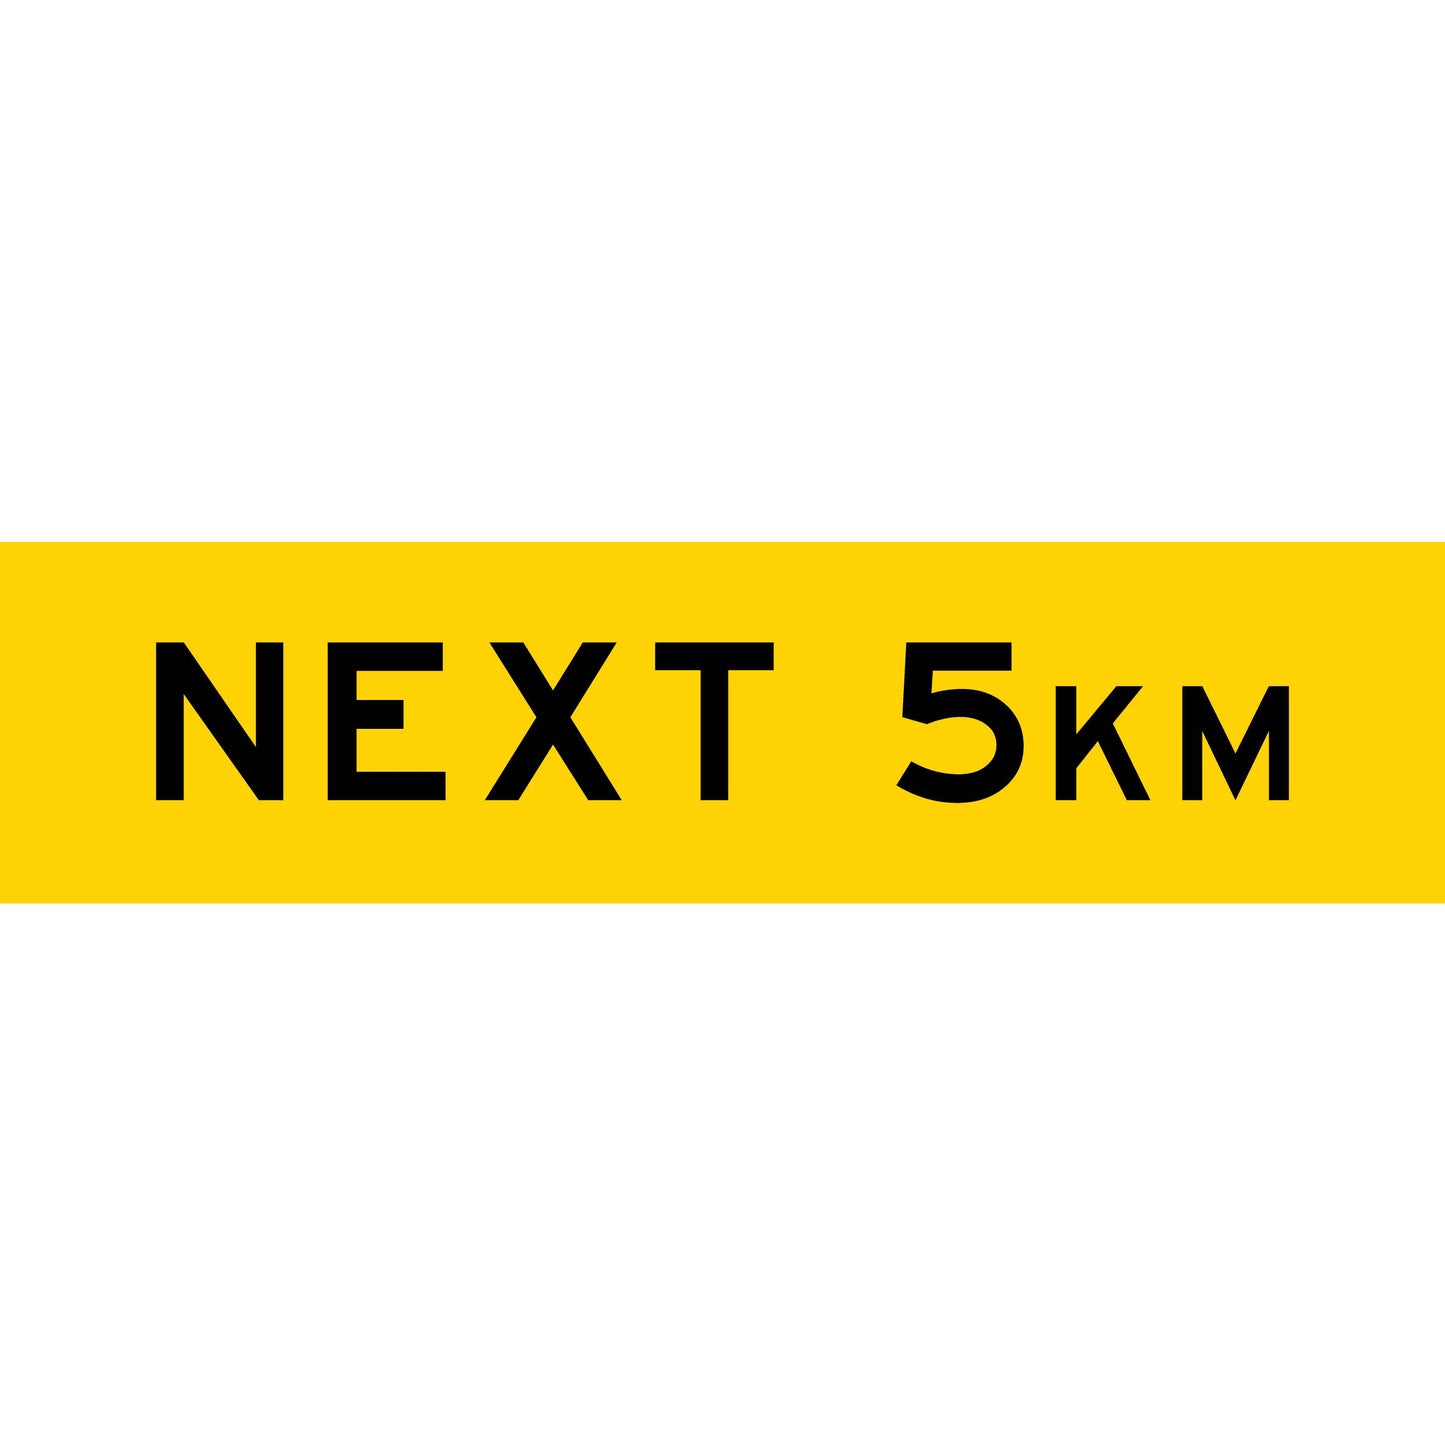 Next 5km Long Skinny Multi Message Reflective Traffic Sign